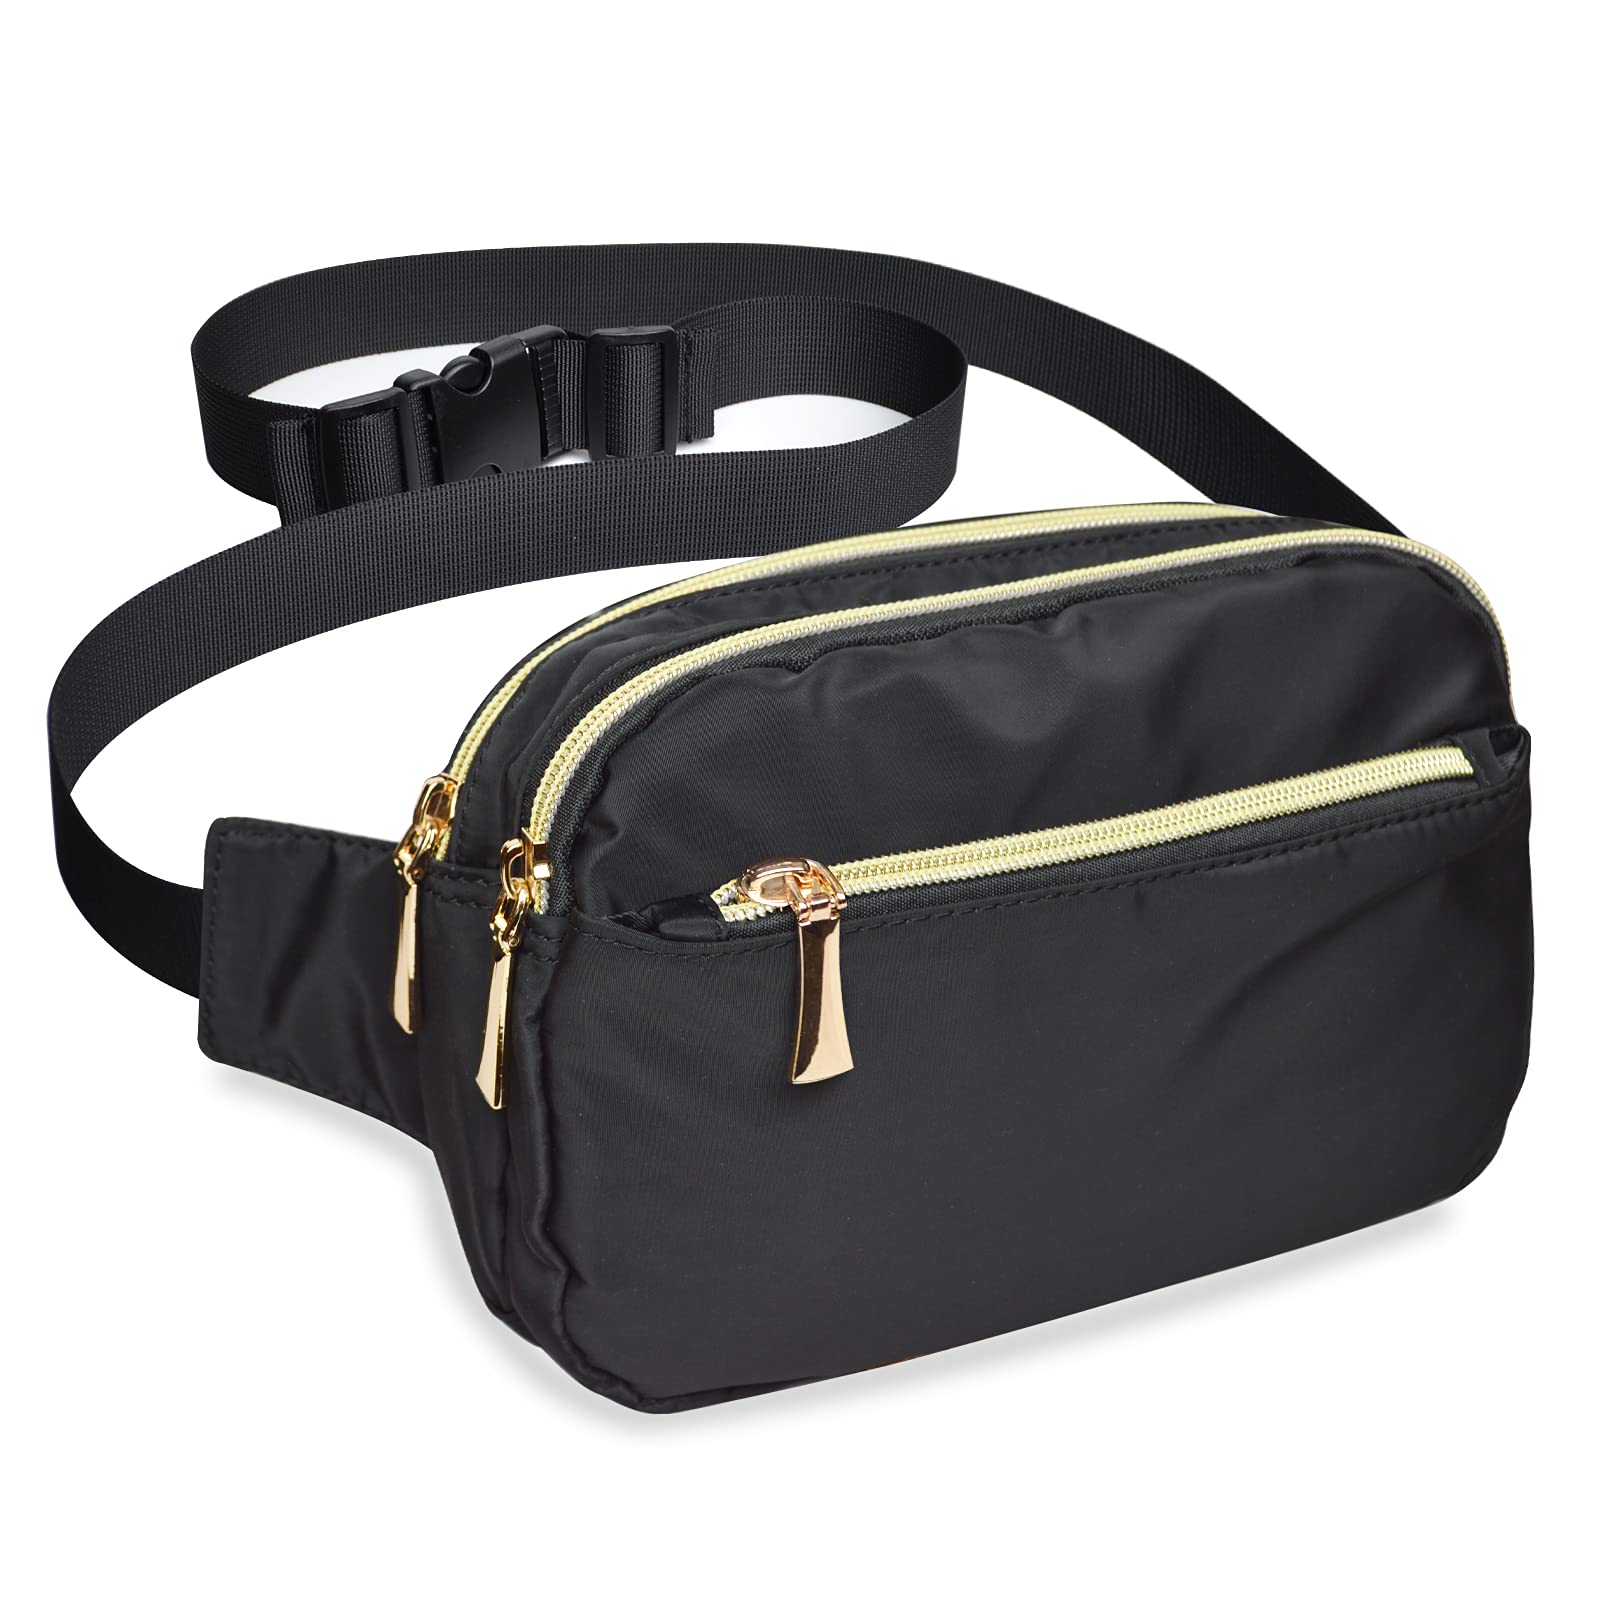  Funny Dog Fanny Pack for Women Waist Hip Bum Bag with  Adjustable Belt Waterproof Crossbody Bag for Gym Running Travel